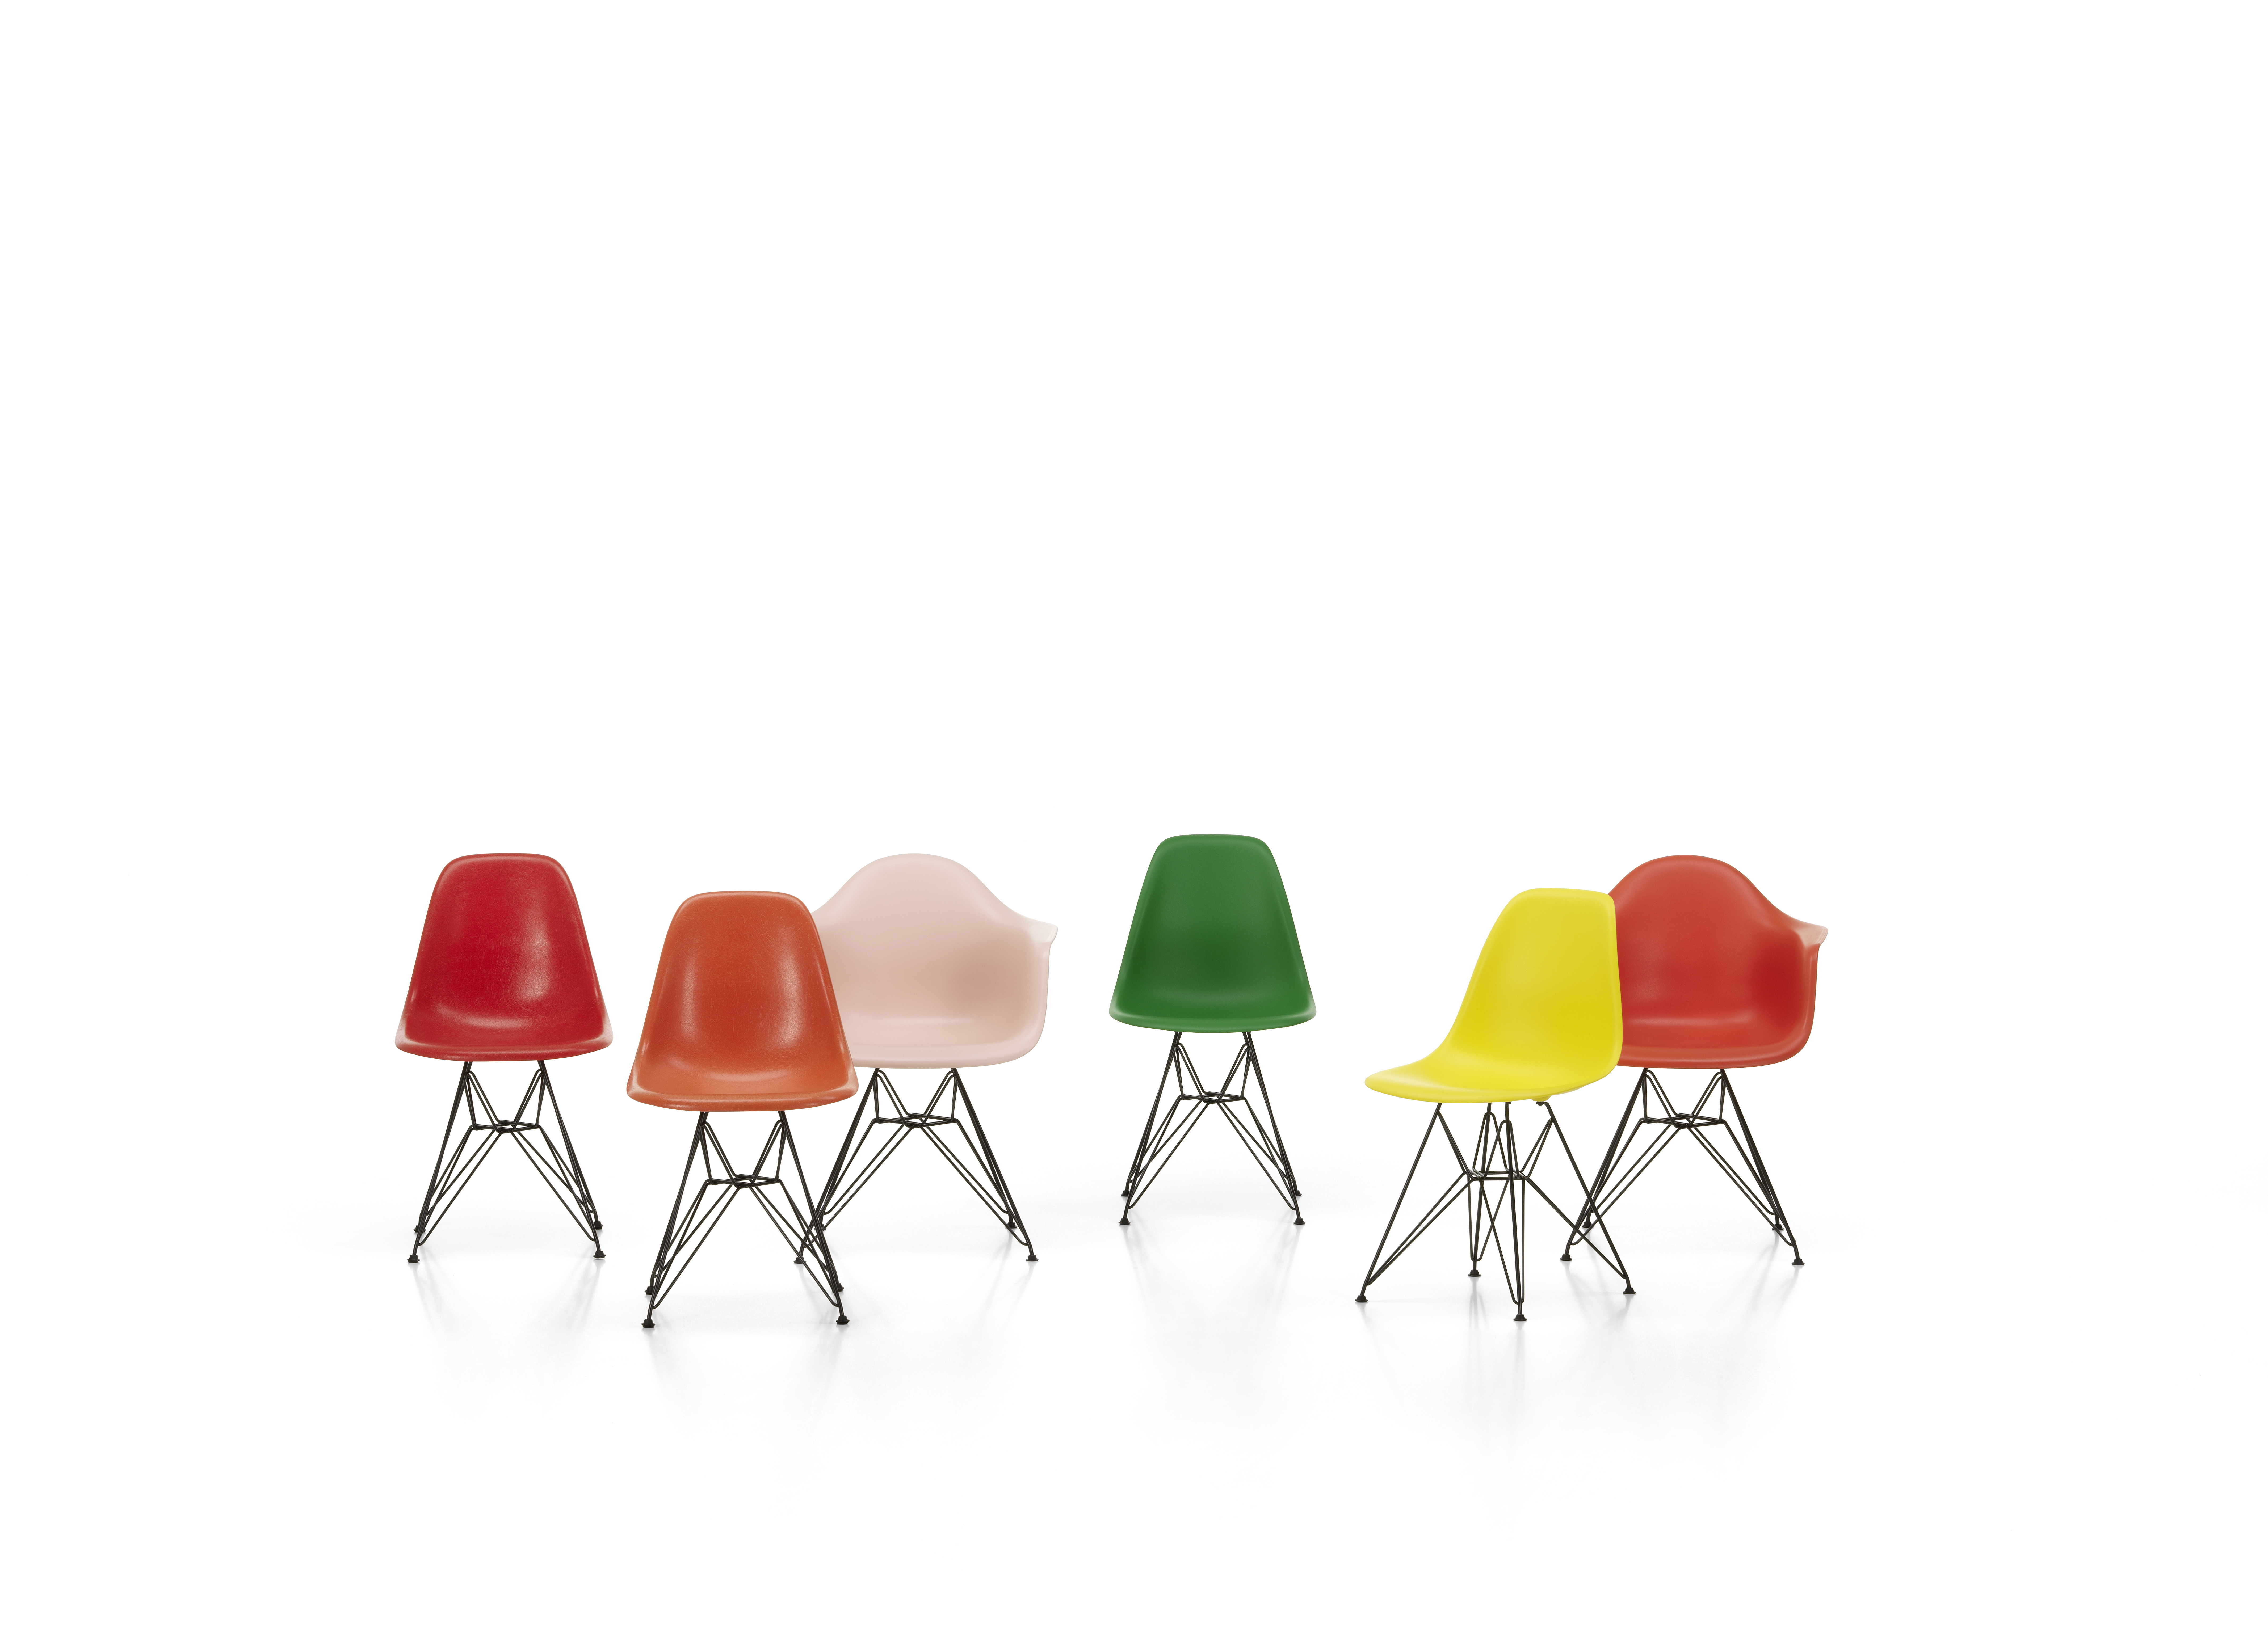 Fiberglass Chairs in verschiedenen Farben